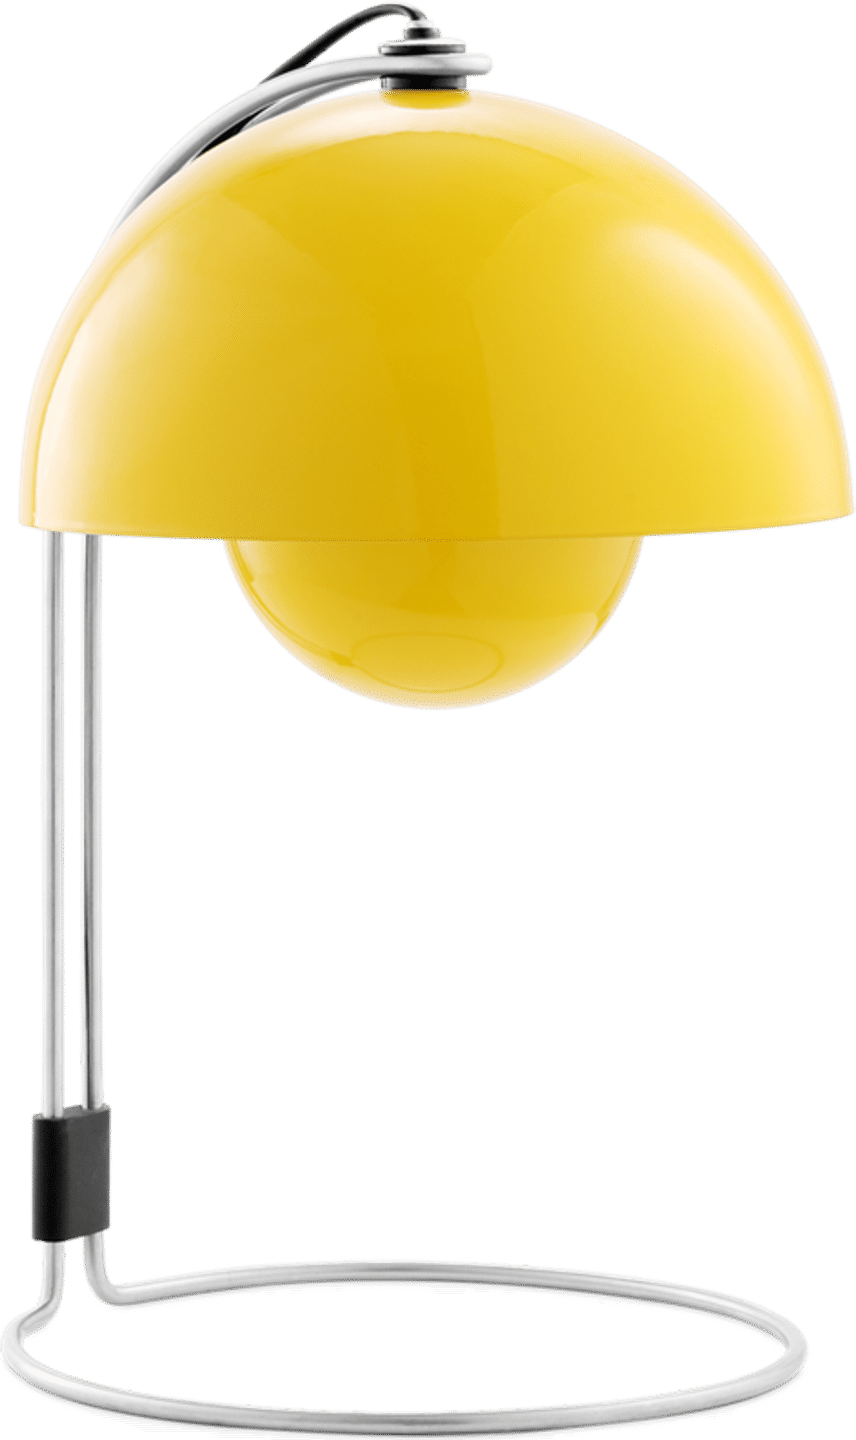 Blumentopf VP4 Style Tischlampe Yellow image.